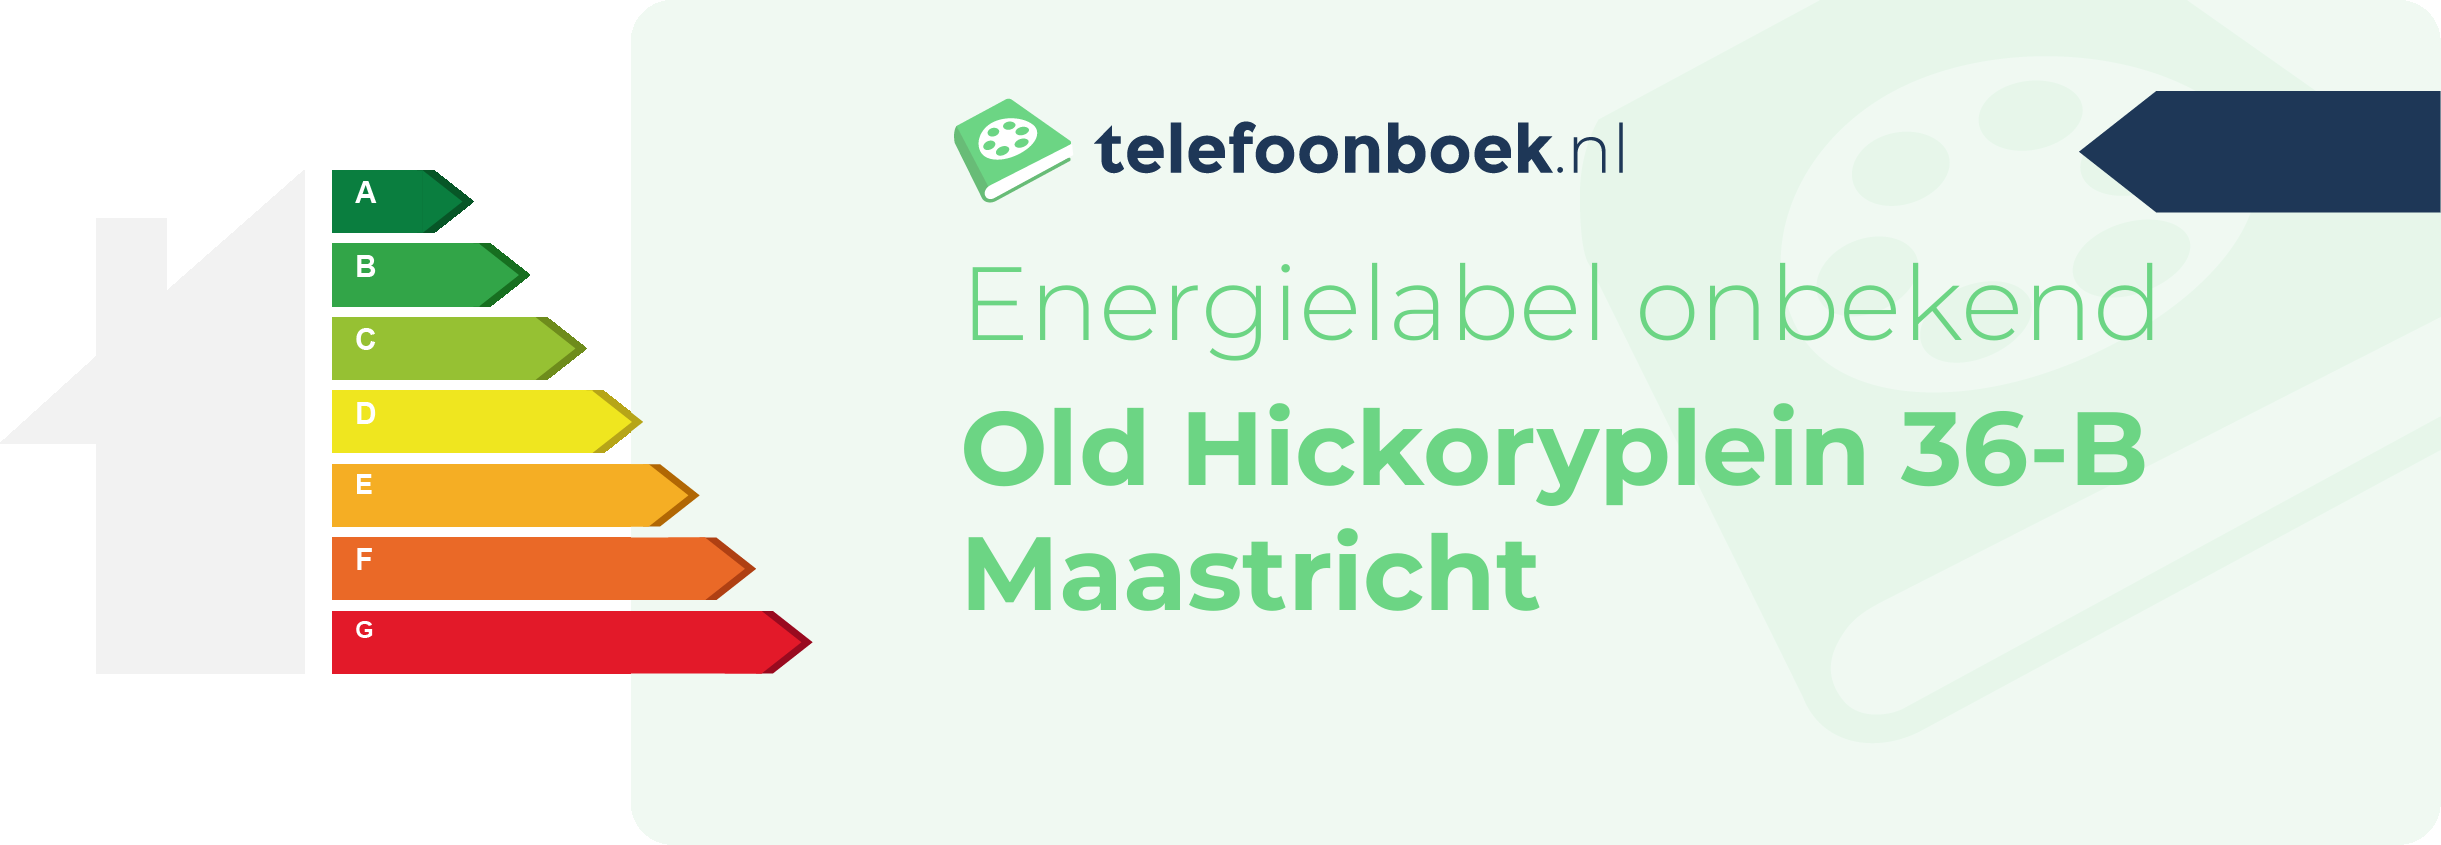 Energielabel Old Hickoryplein 36-B Maastricht